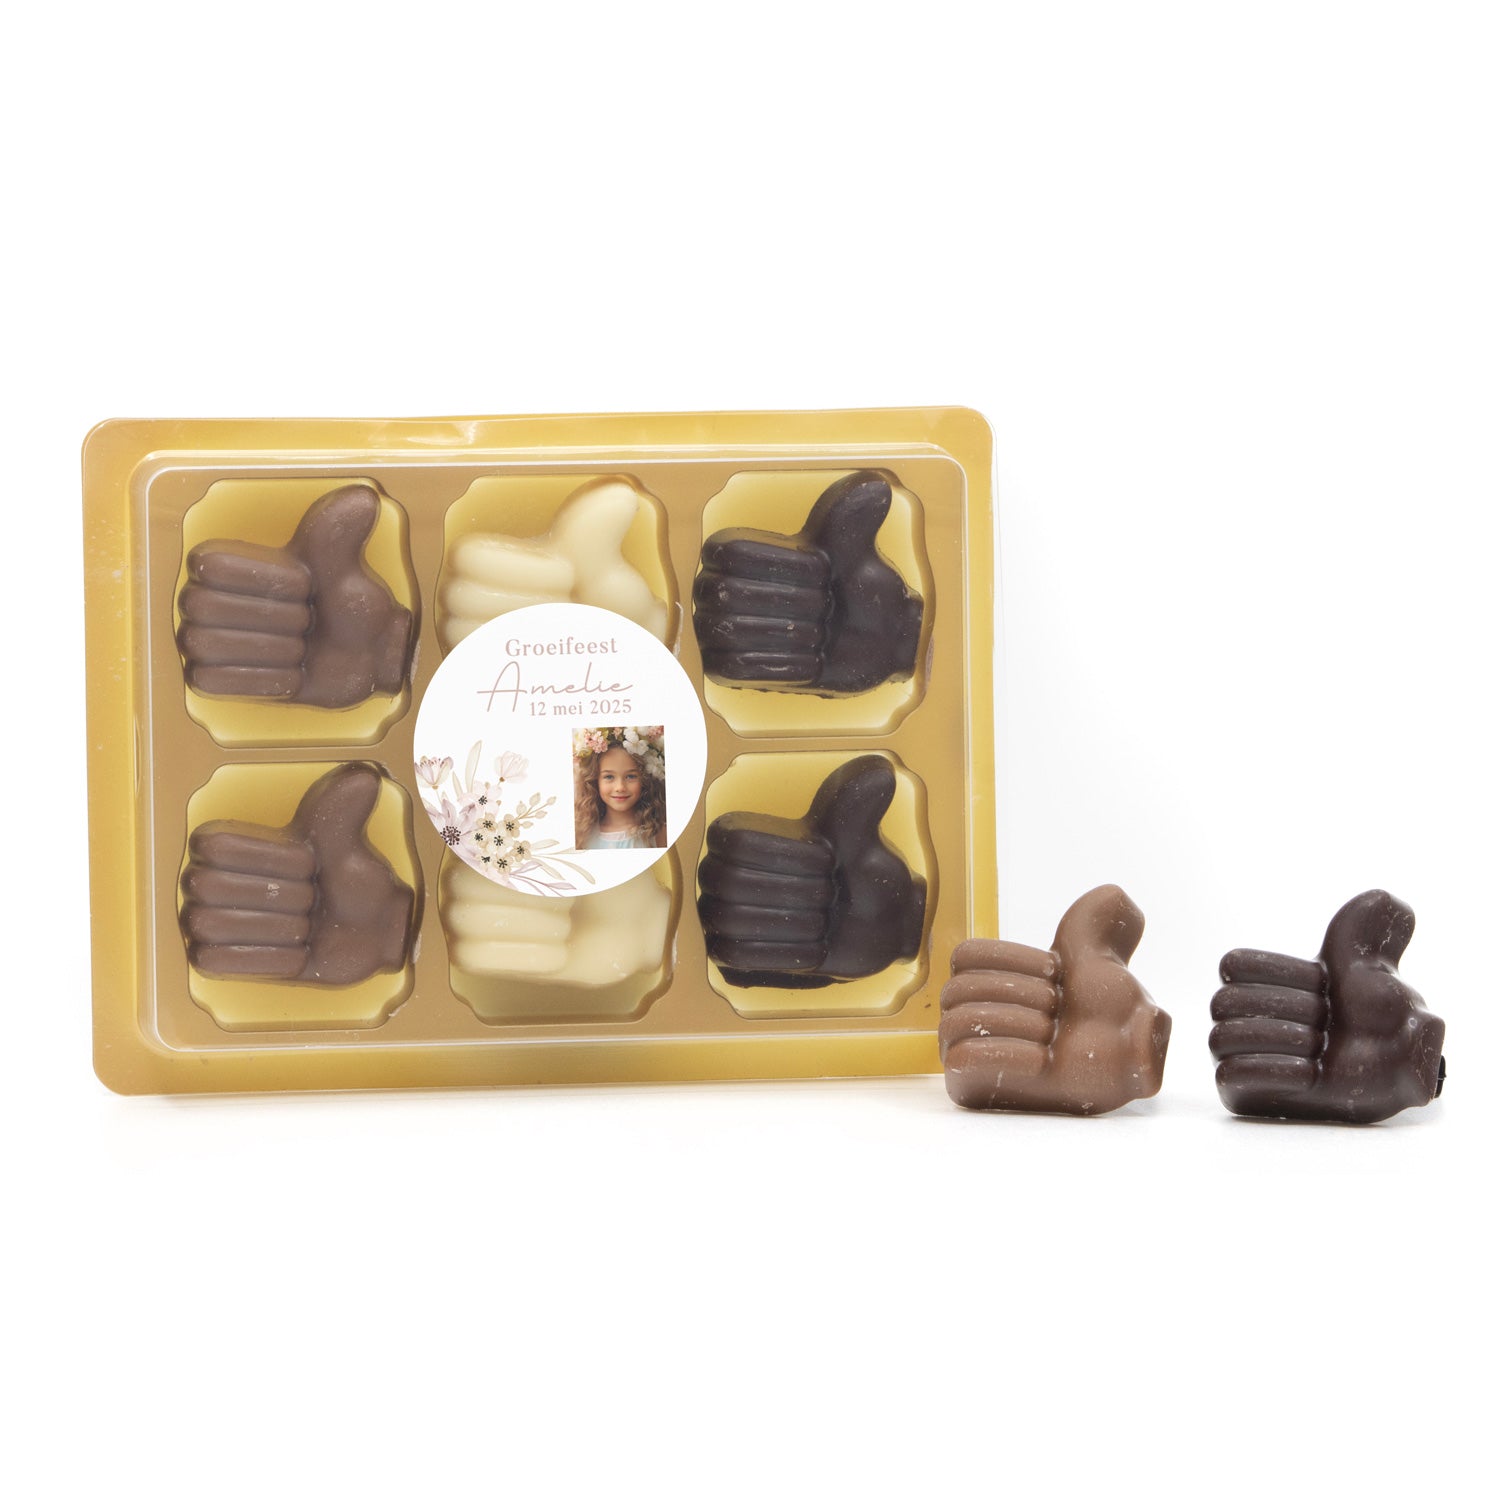 Chocolade duimpjes 6st - Communie meisjes - Bedankjes.nl